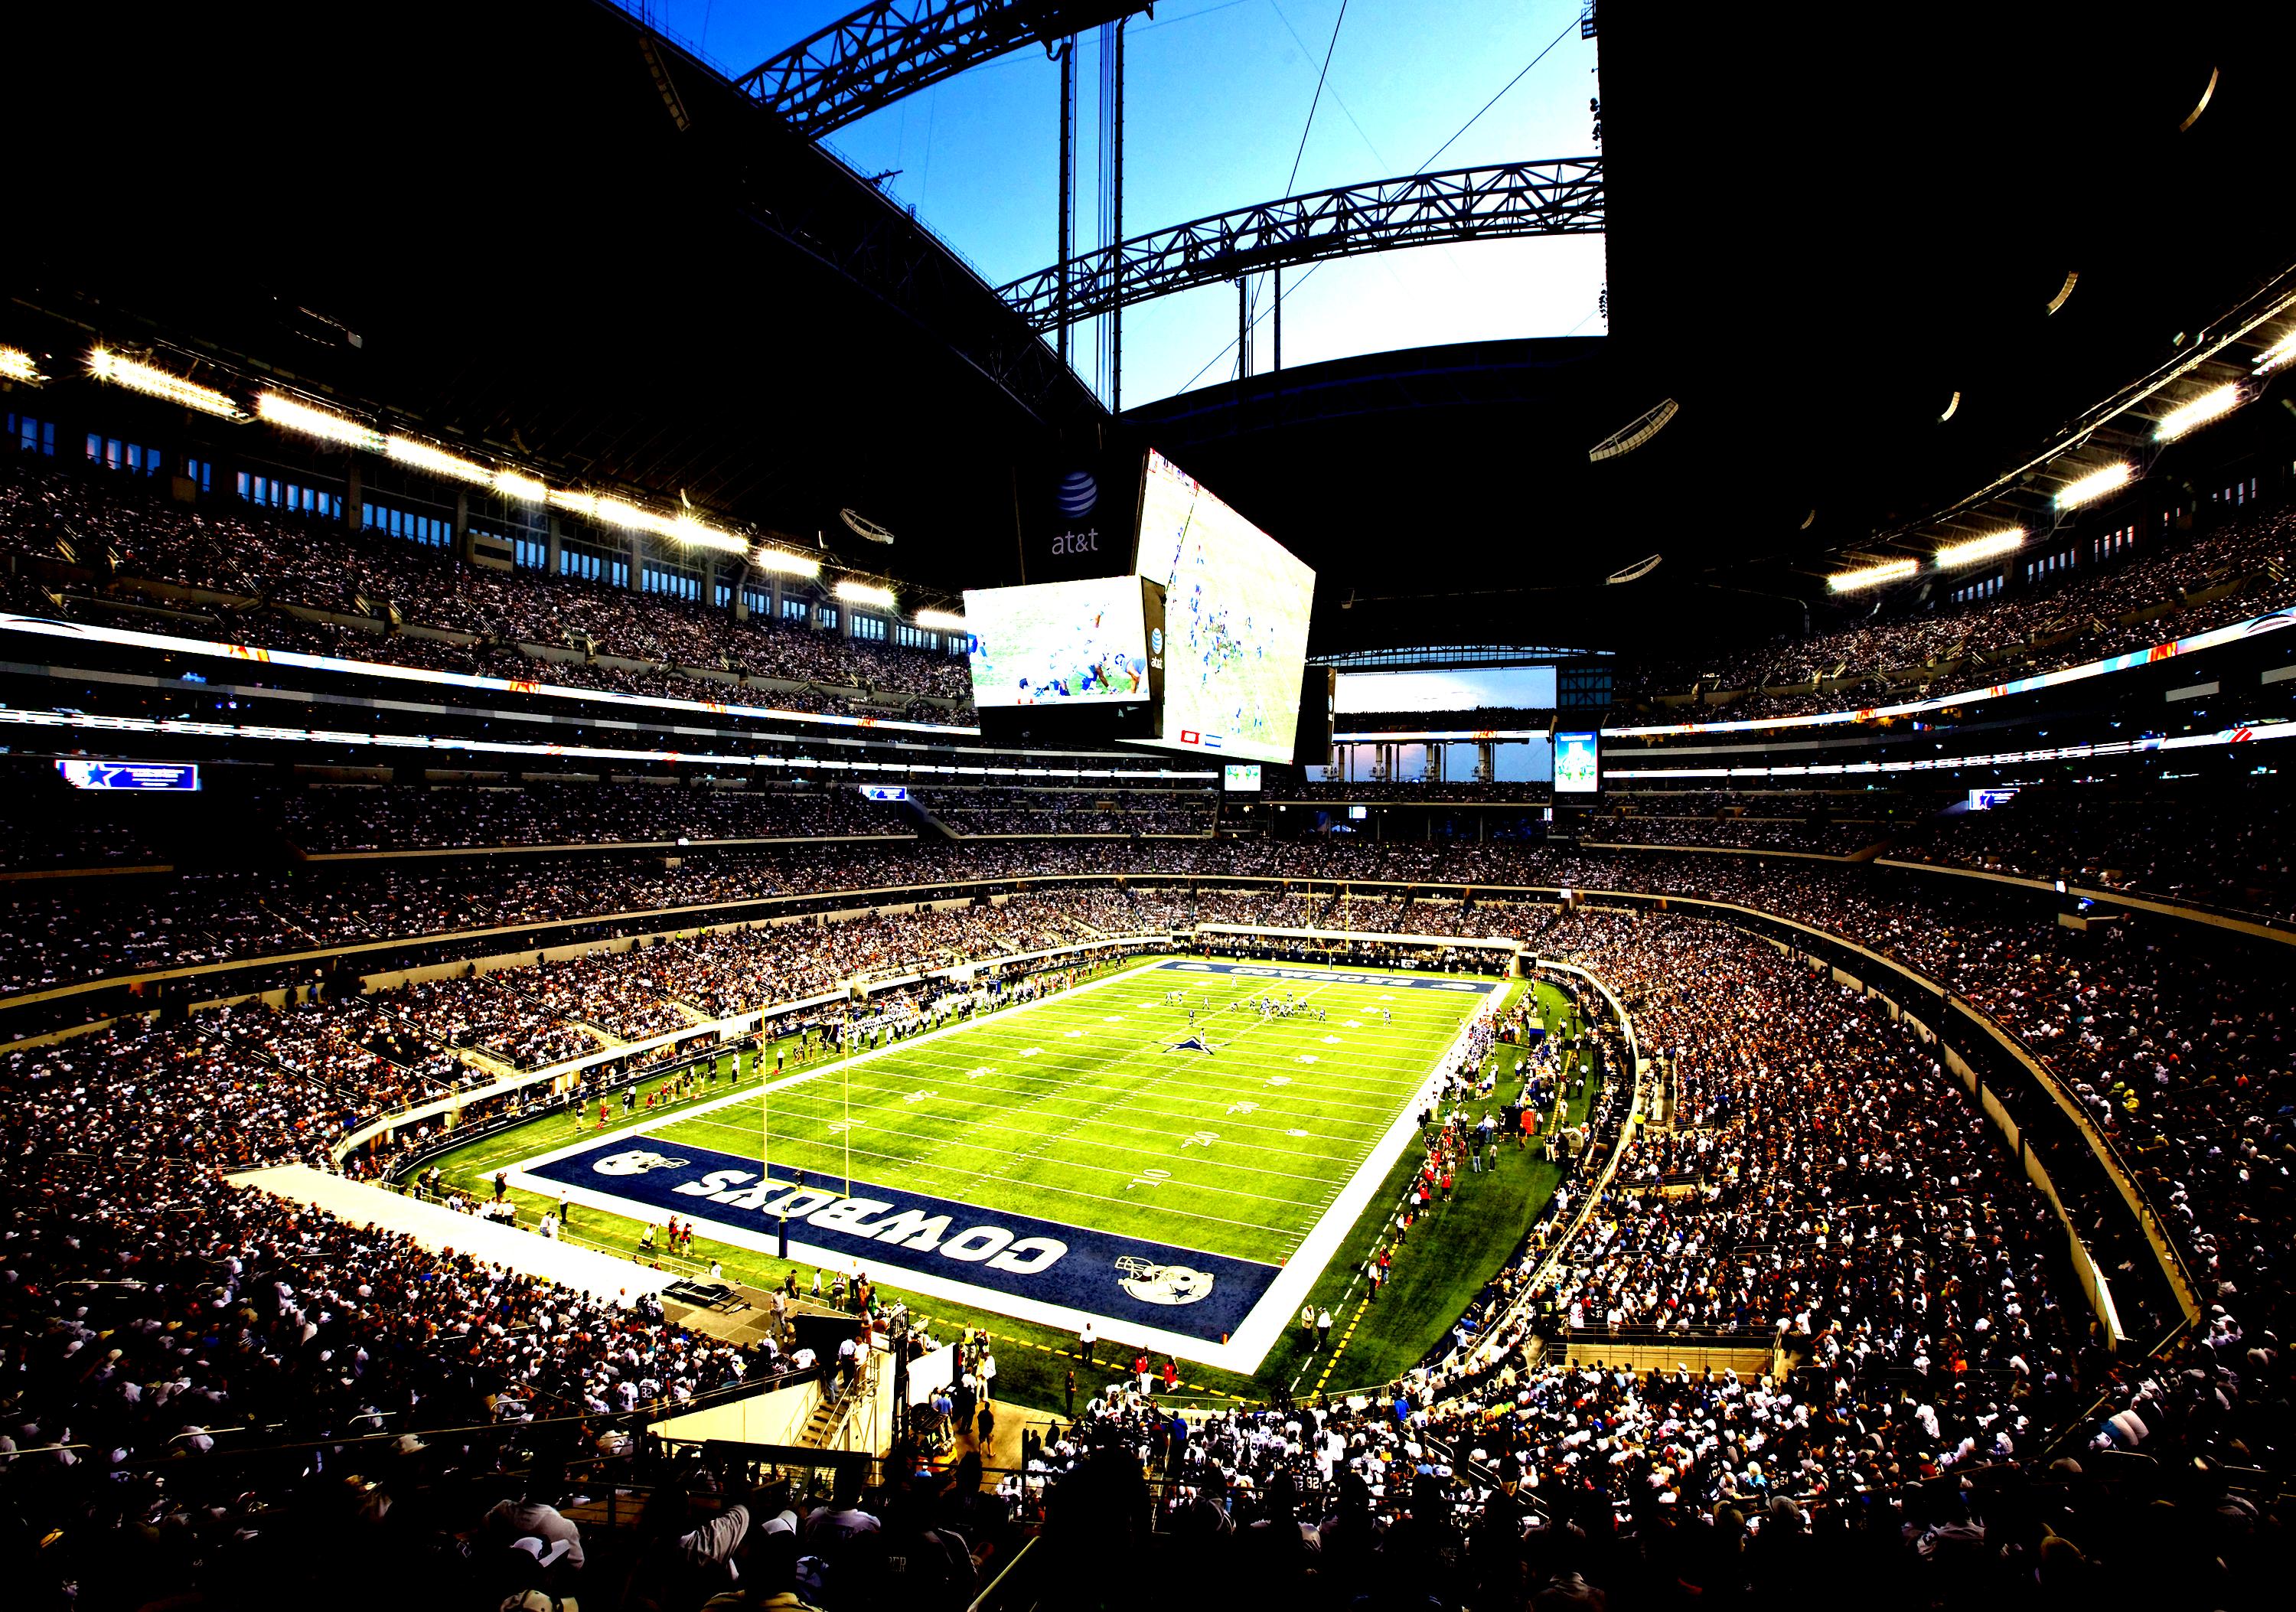 Dallas Cowboys Stadium Wallpaper